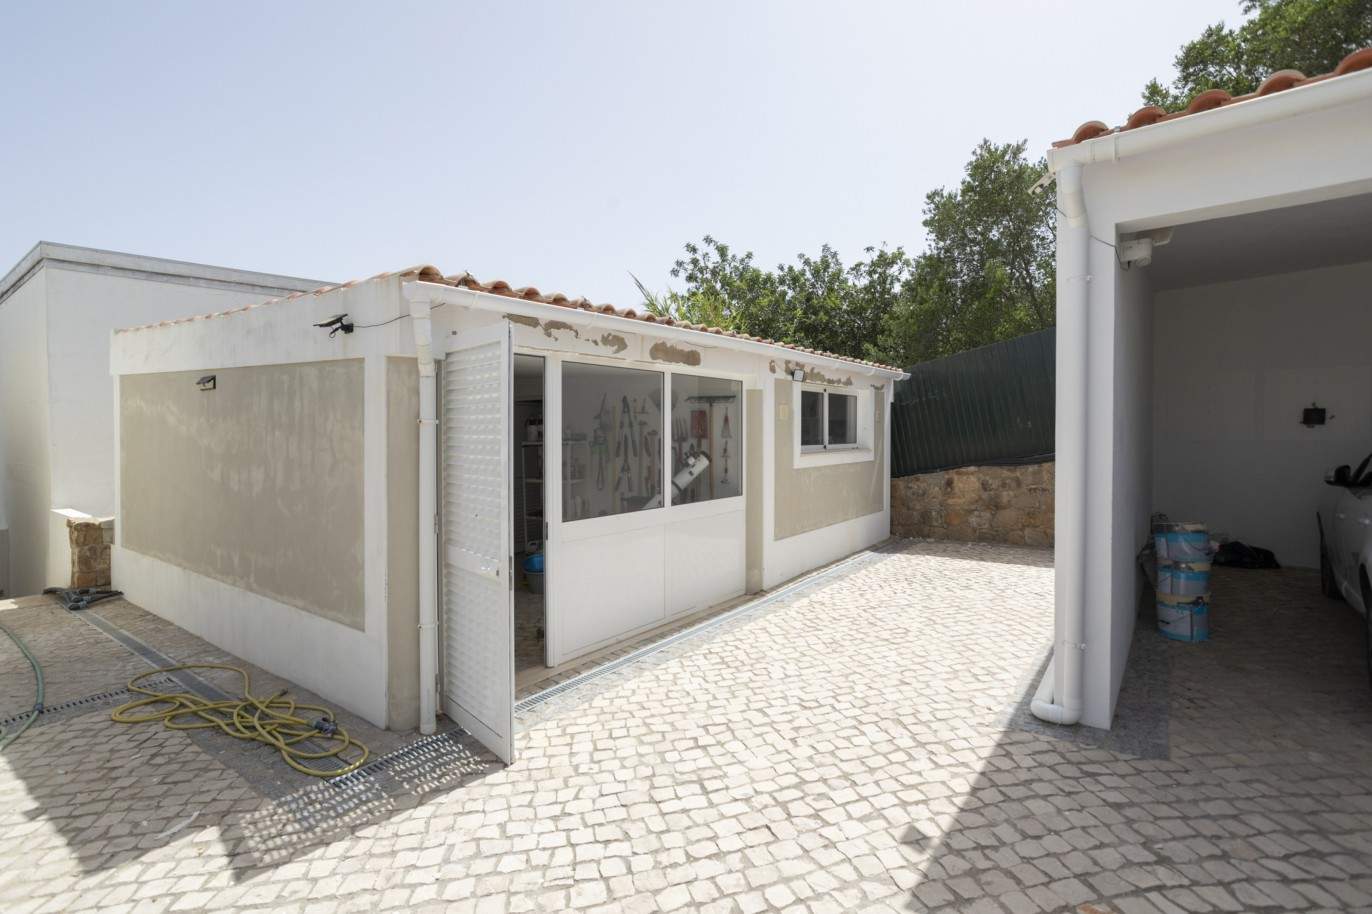 3 Bedroom Villa with swimming pool, for sale in Estoi, Algarve_201387